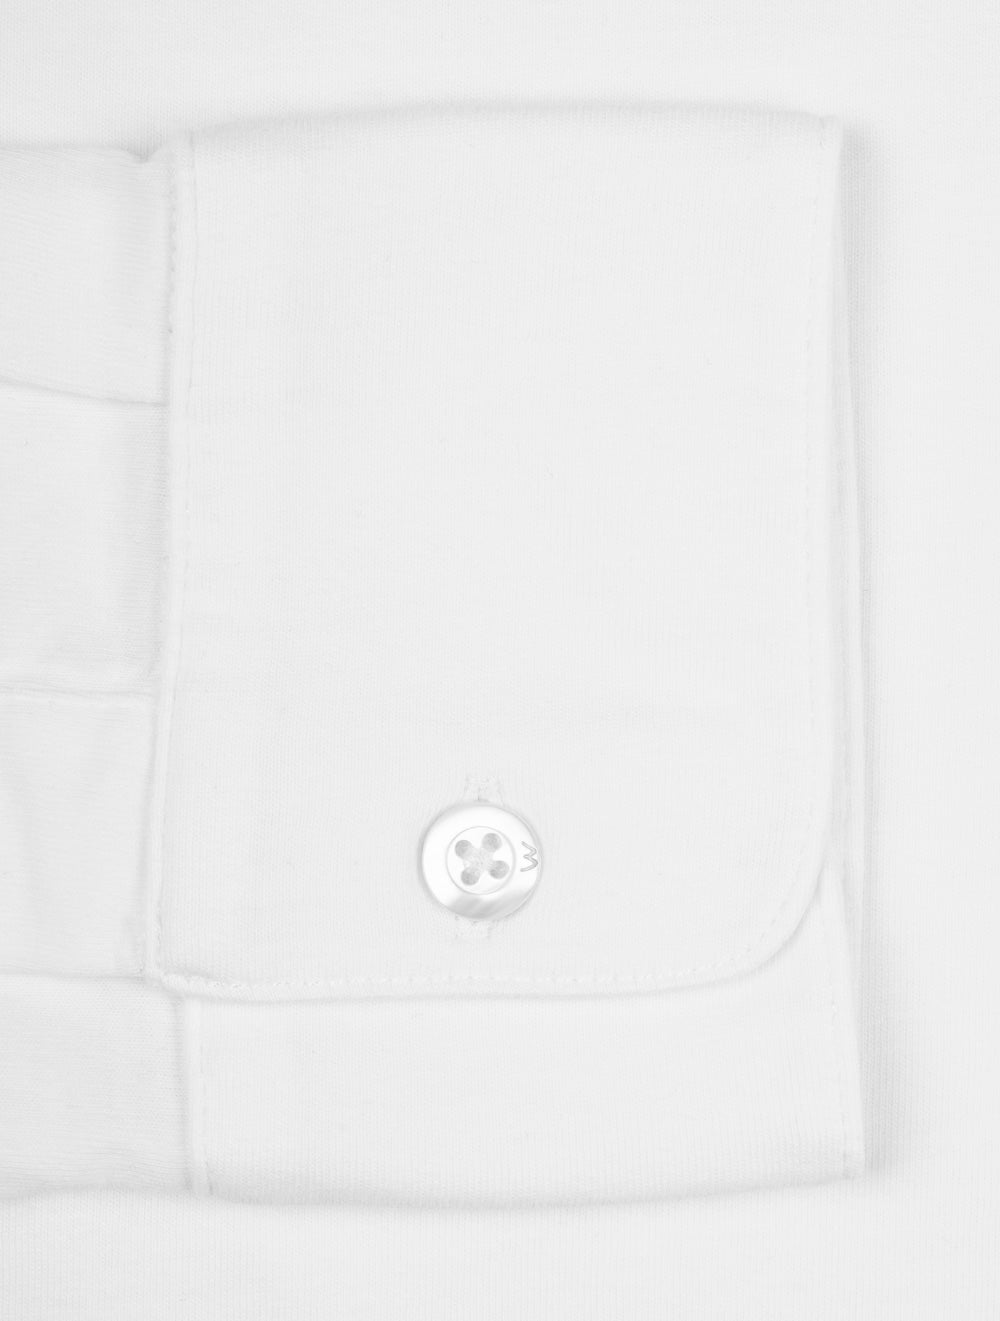 WAHTS Tailored Jersey Poloshirt White